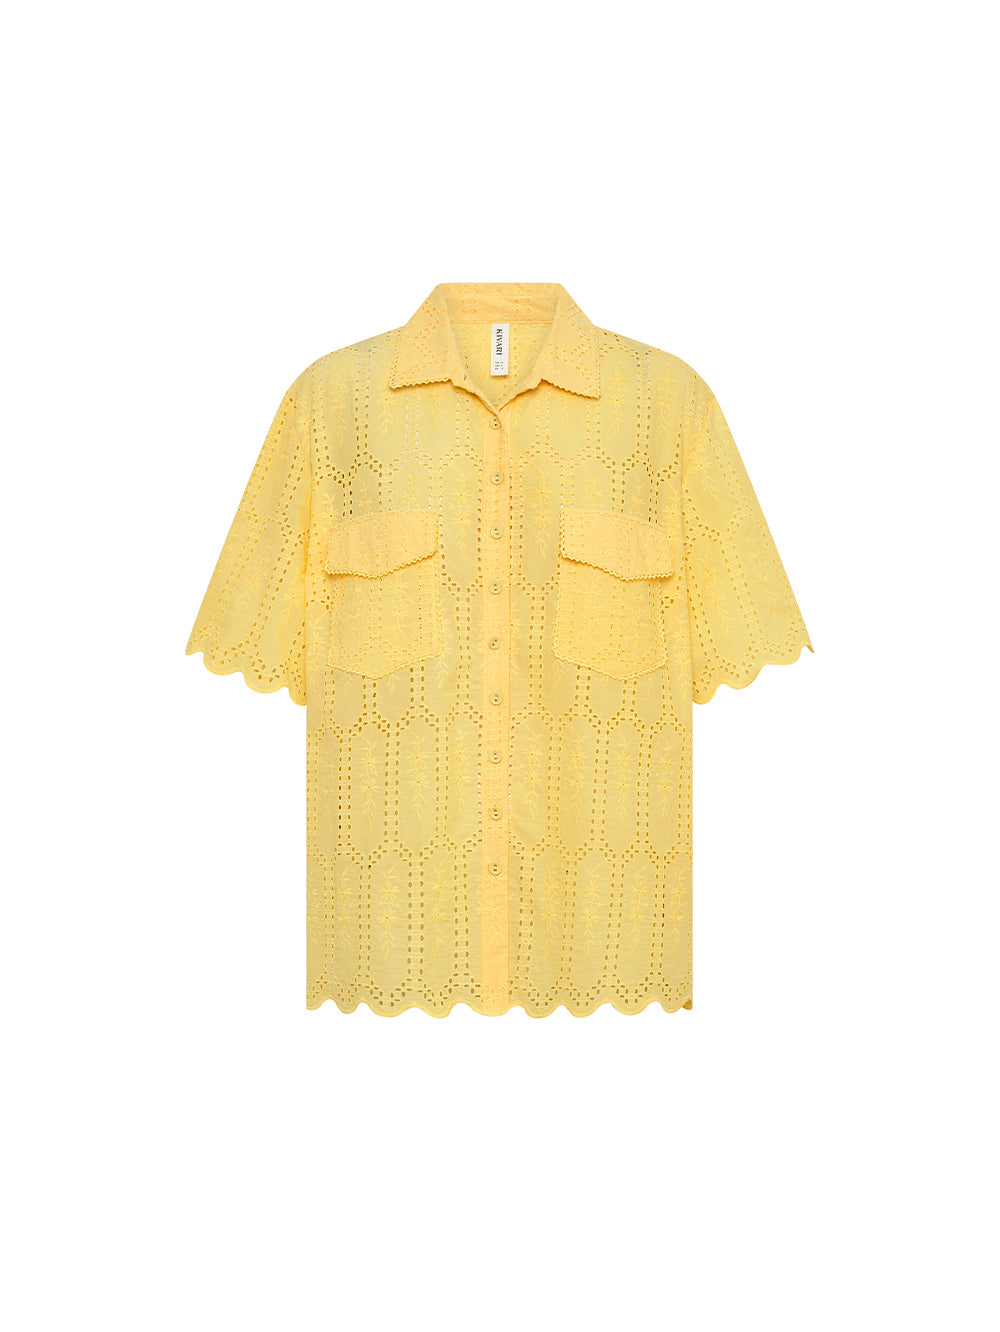 Estelle Shirt KIVARI | Yellow shirt